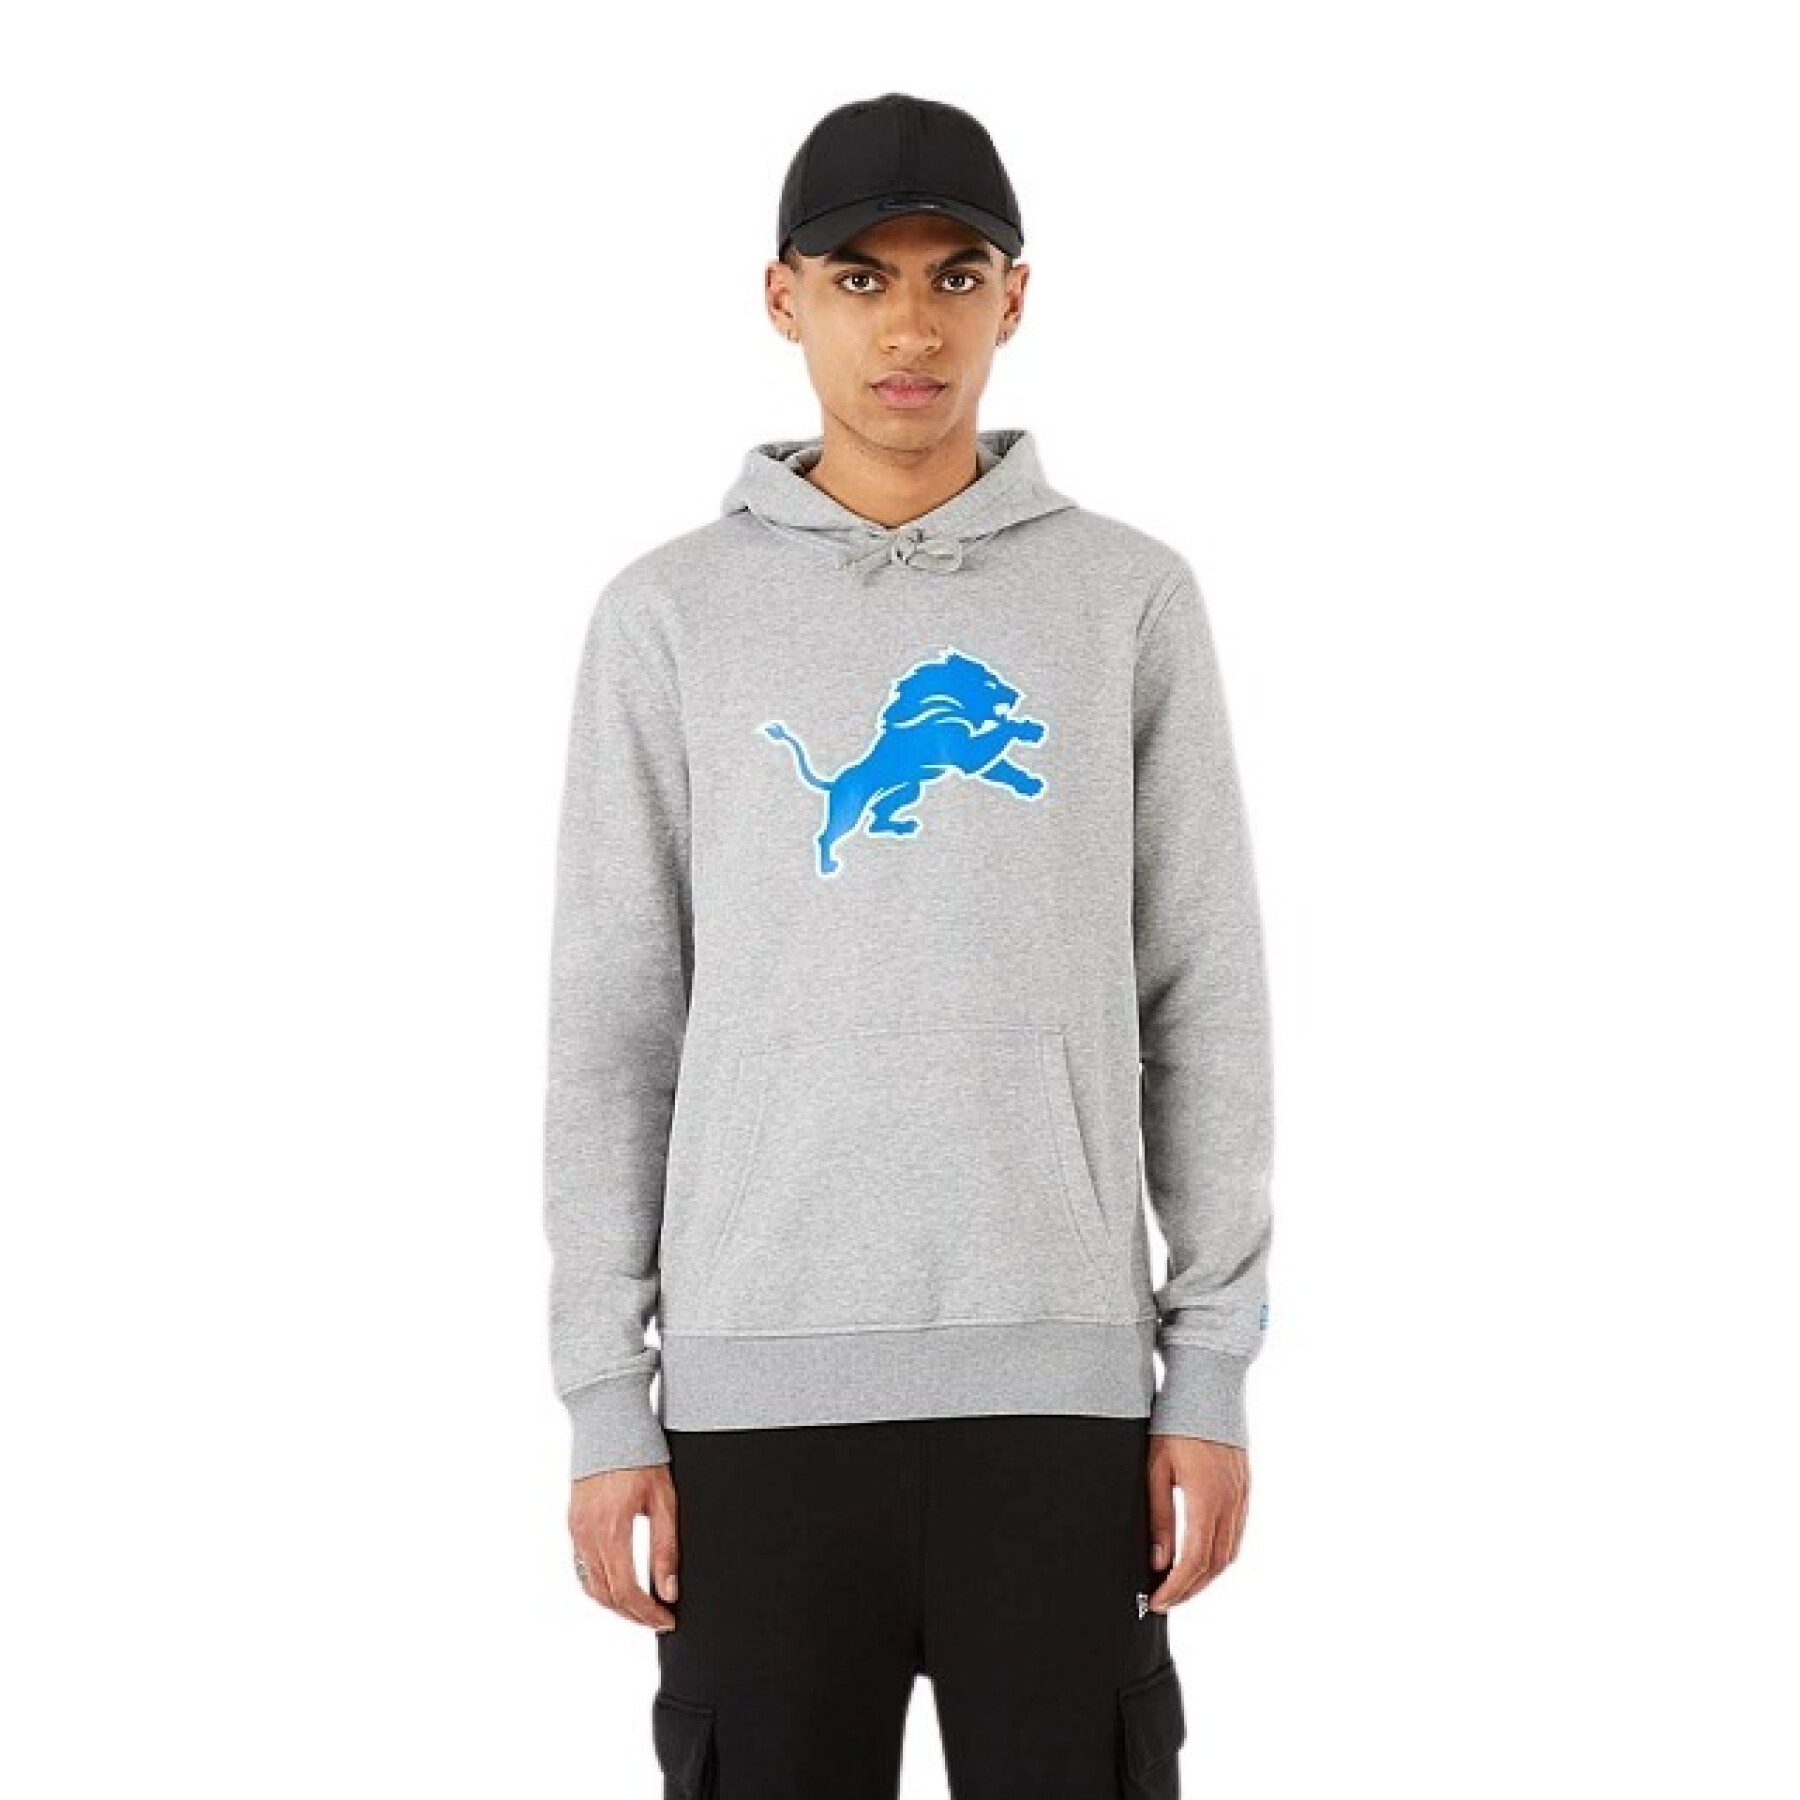 Hooded sweatshirt Detroit Lions NFL